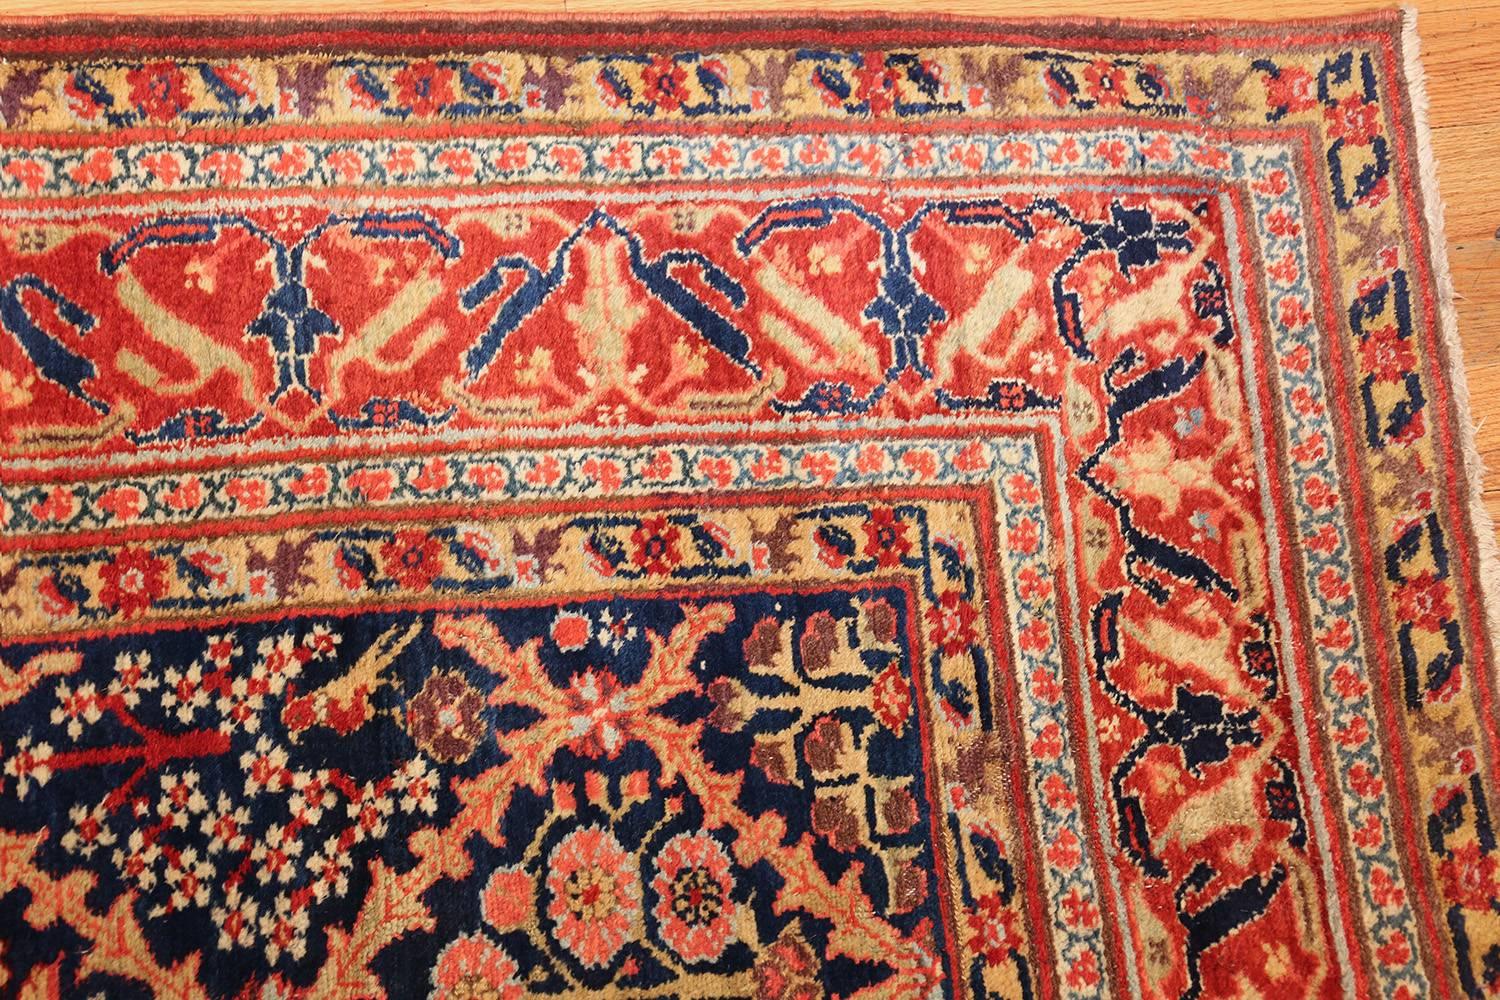 Breathtaking Rare Large Size 18th Century Antique Kurdish Shrub Design Rug, Country Of Origin / Rug Type: Persian Rug, Circa Date: 18th Century. Size: 12 ft 8 in x 18 ft (3.86 m x 5.49 m)

A latticework fills this antique Persian rug with warm,